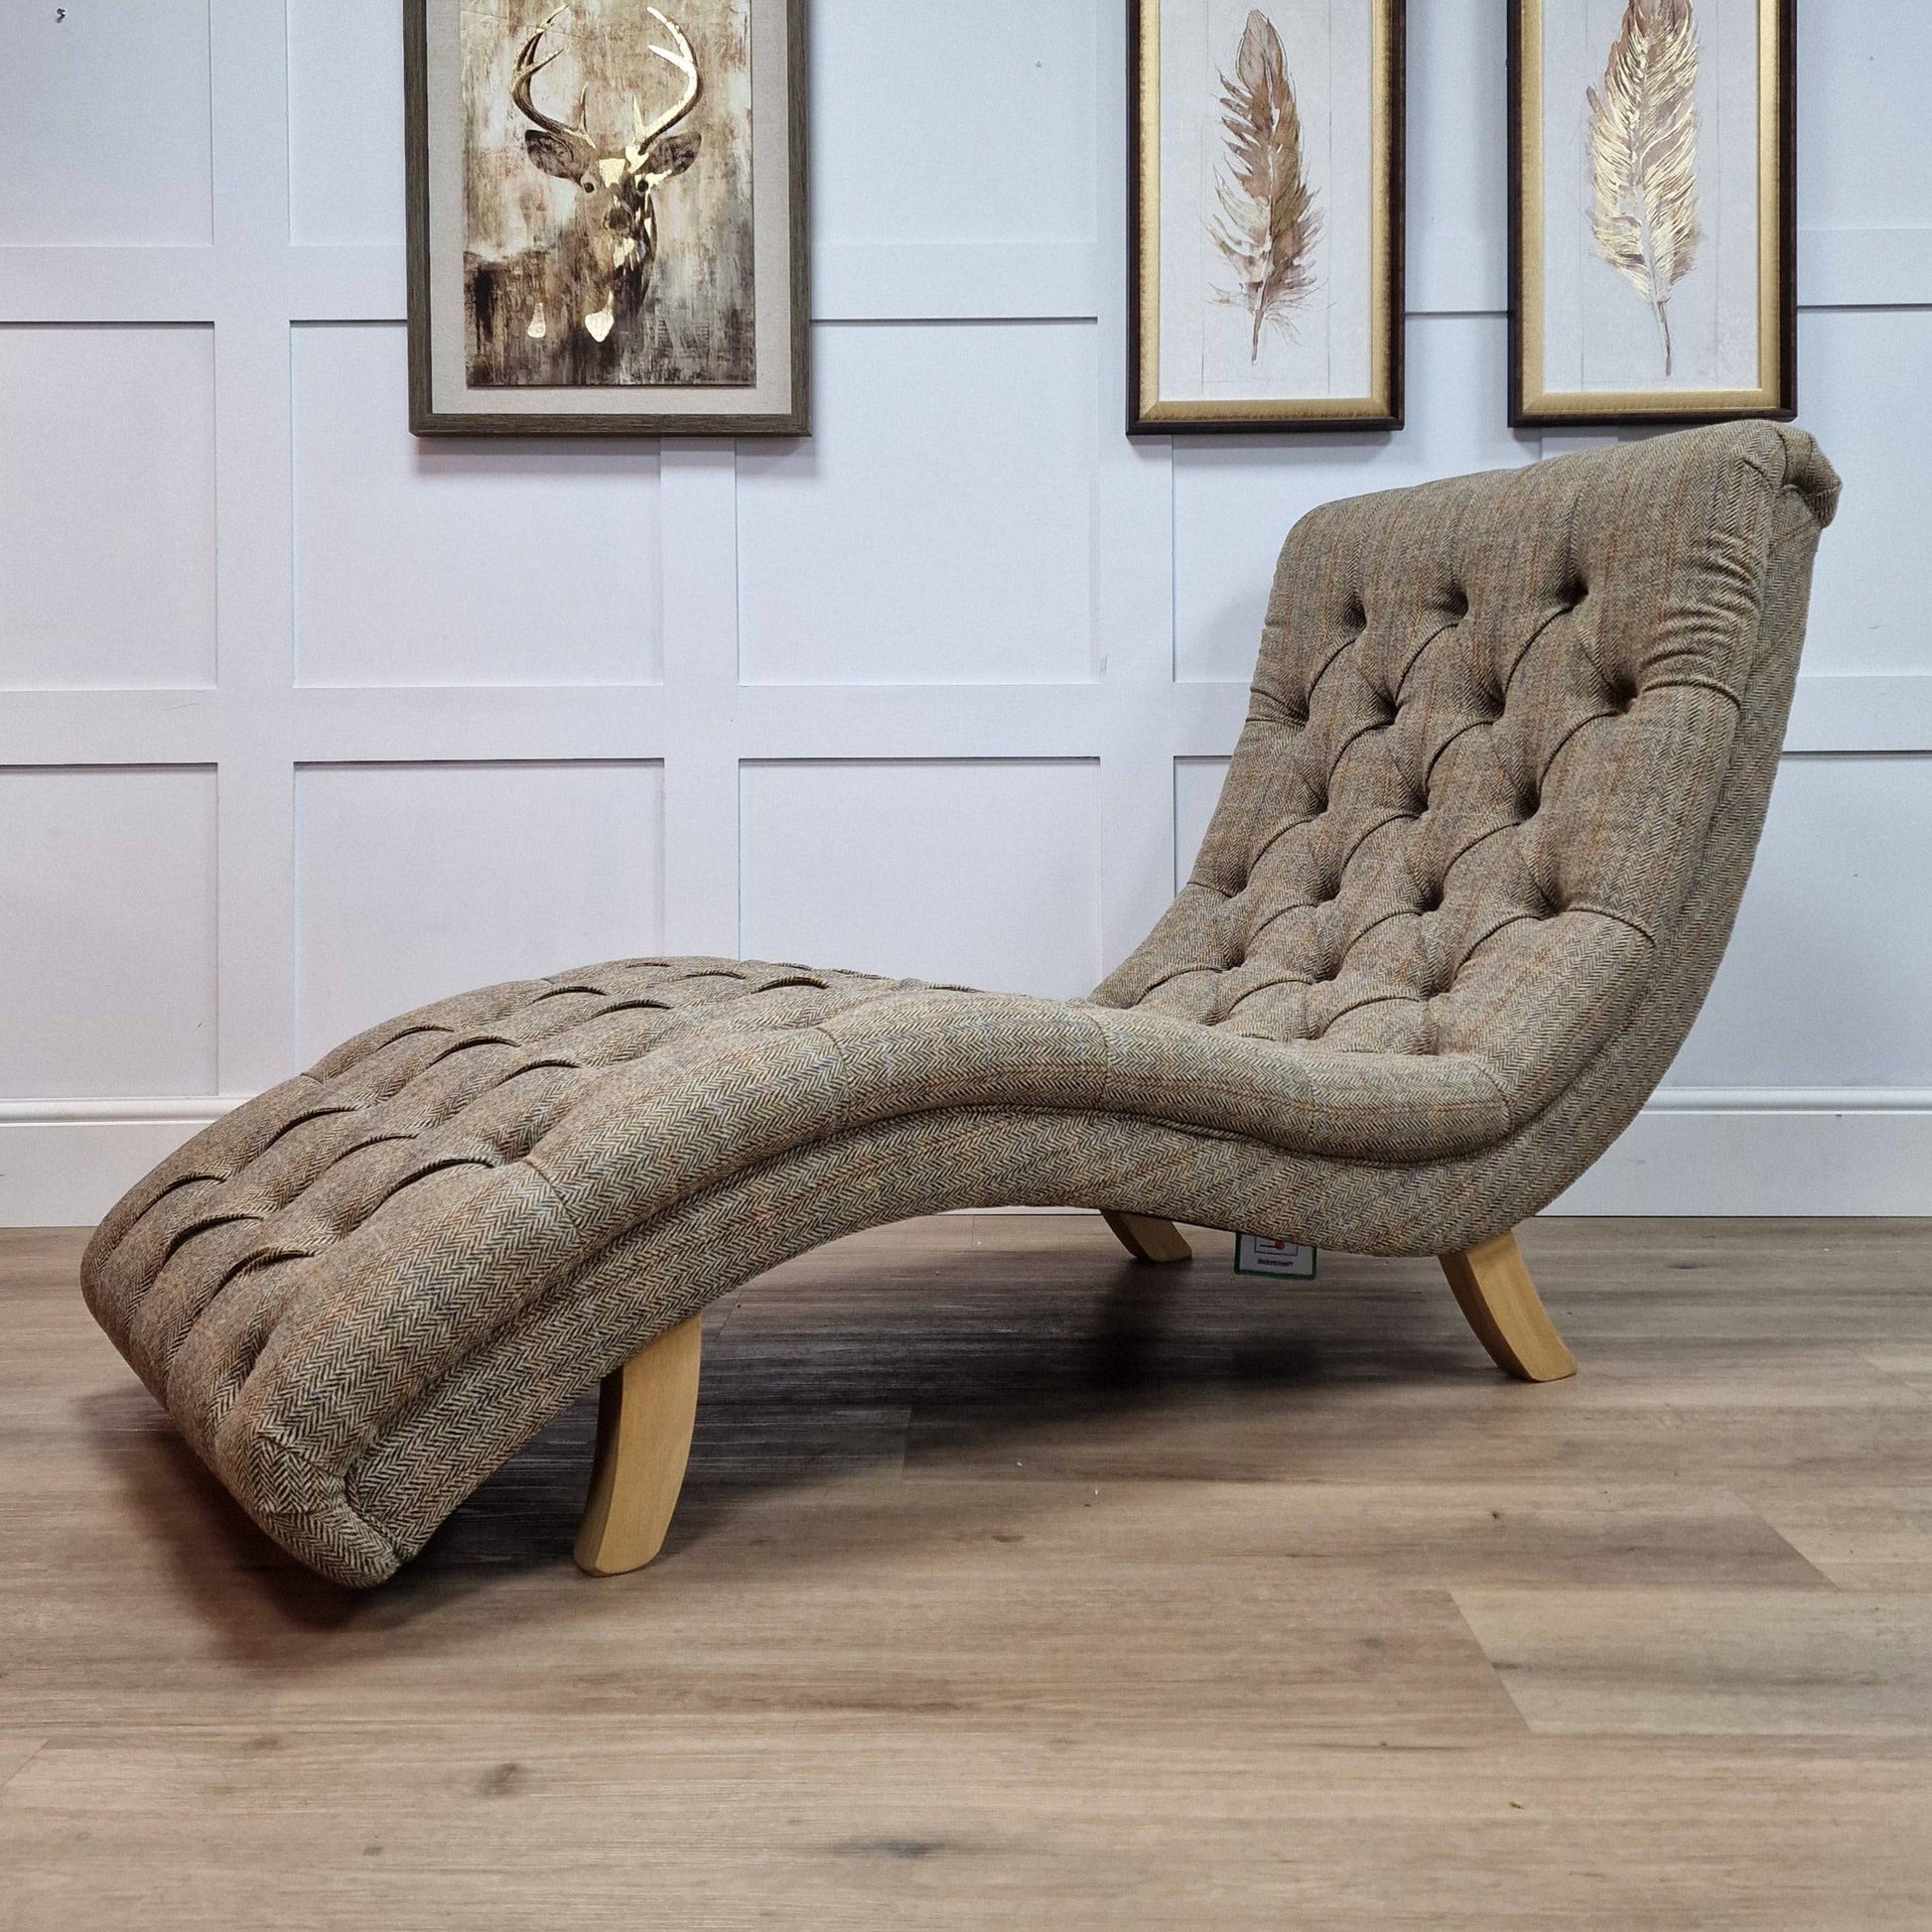 Harris Tweed Chaise Longue - Brown and Beige Herringbone | Classic - Rydan Interiors